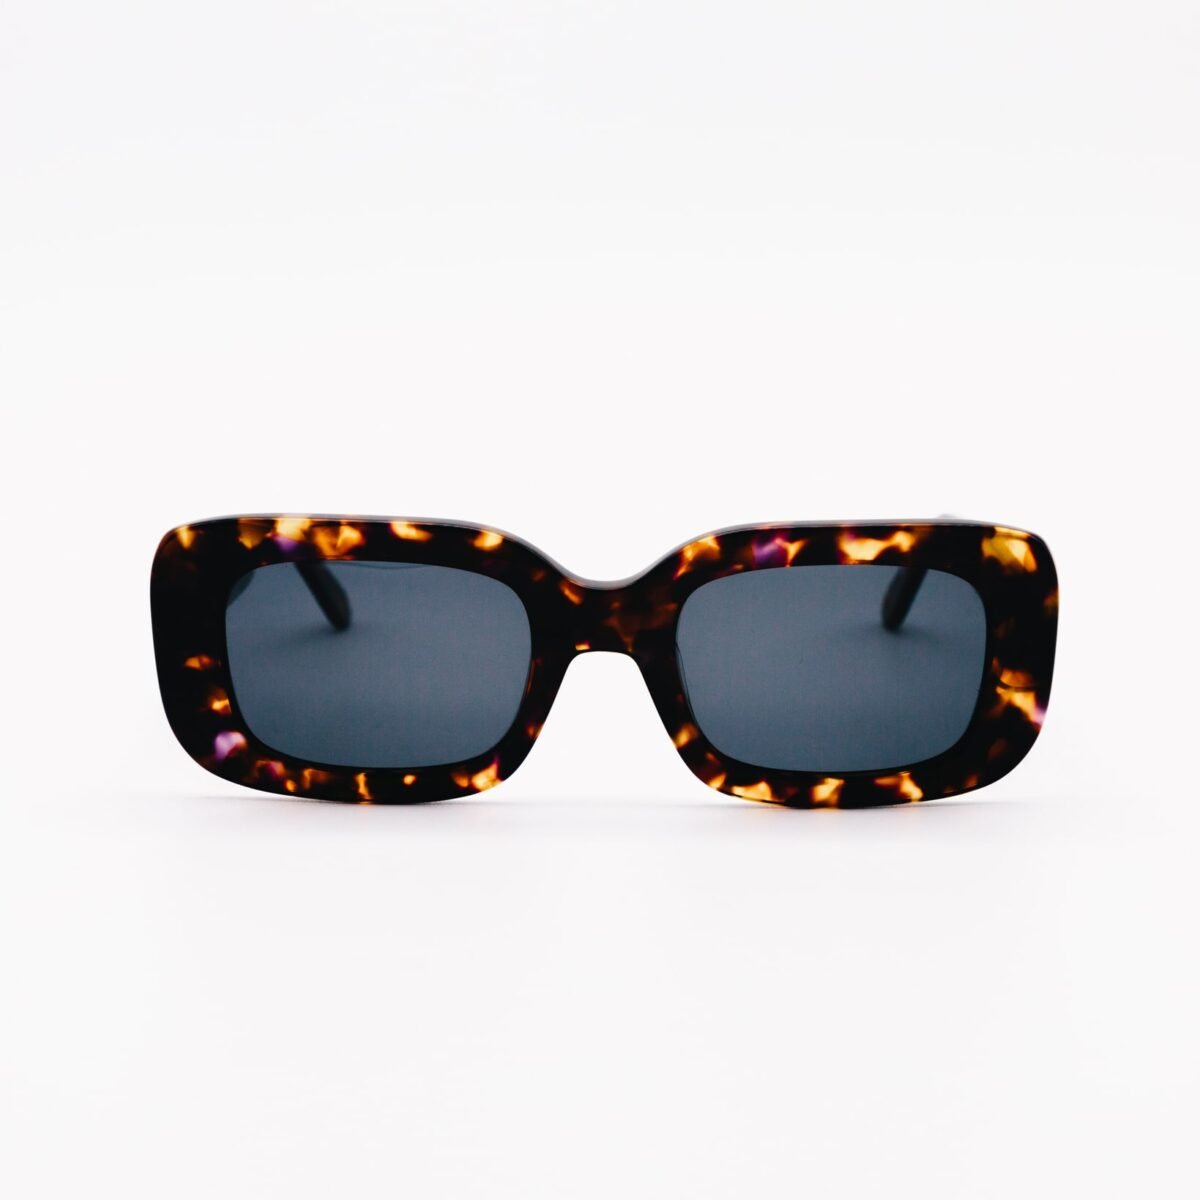 Feminine Sunglasses | Shop the latest trends